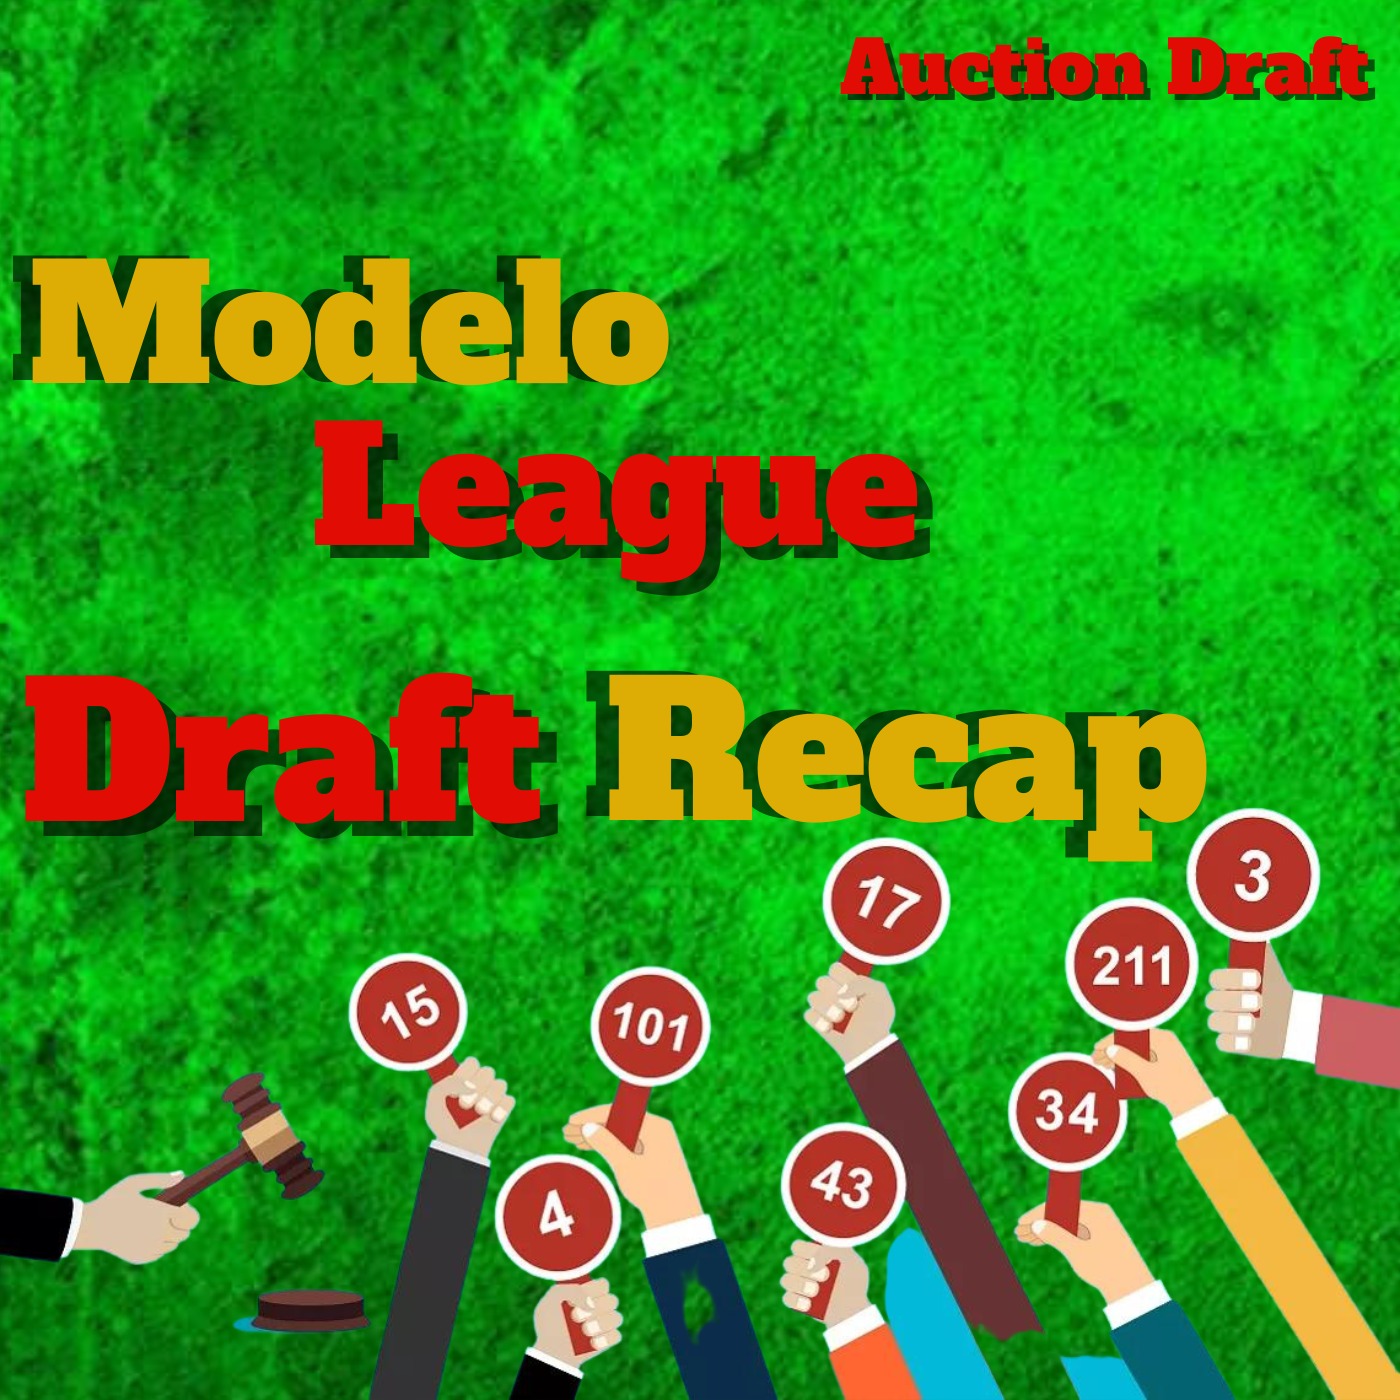 Modelo League Draft Recap | Fantasy Football 2022 Image